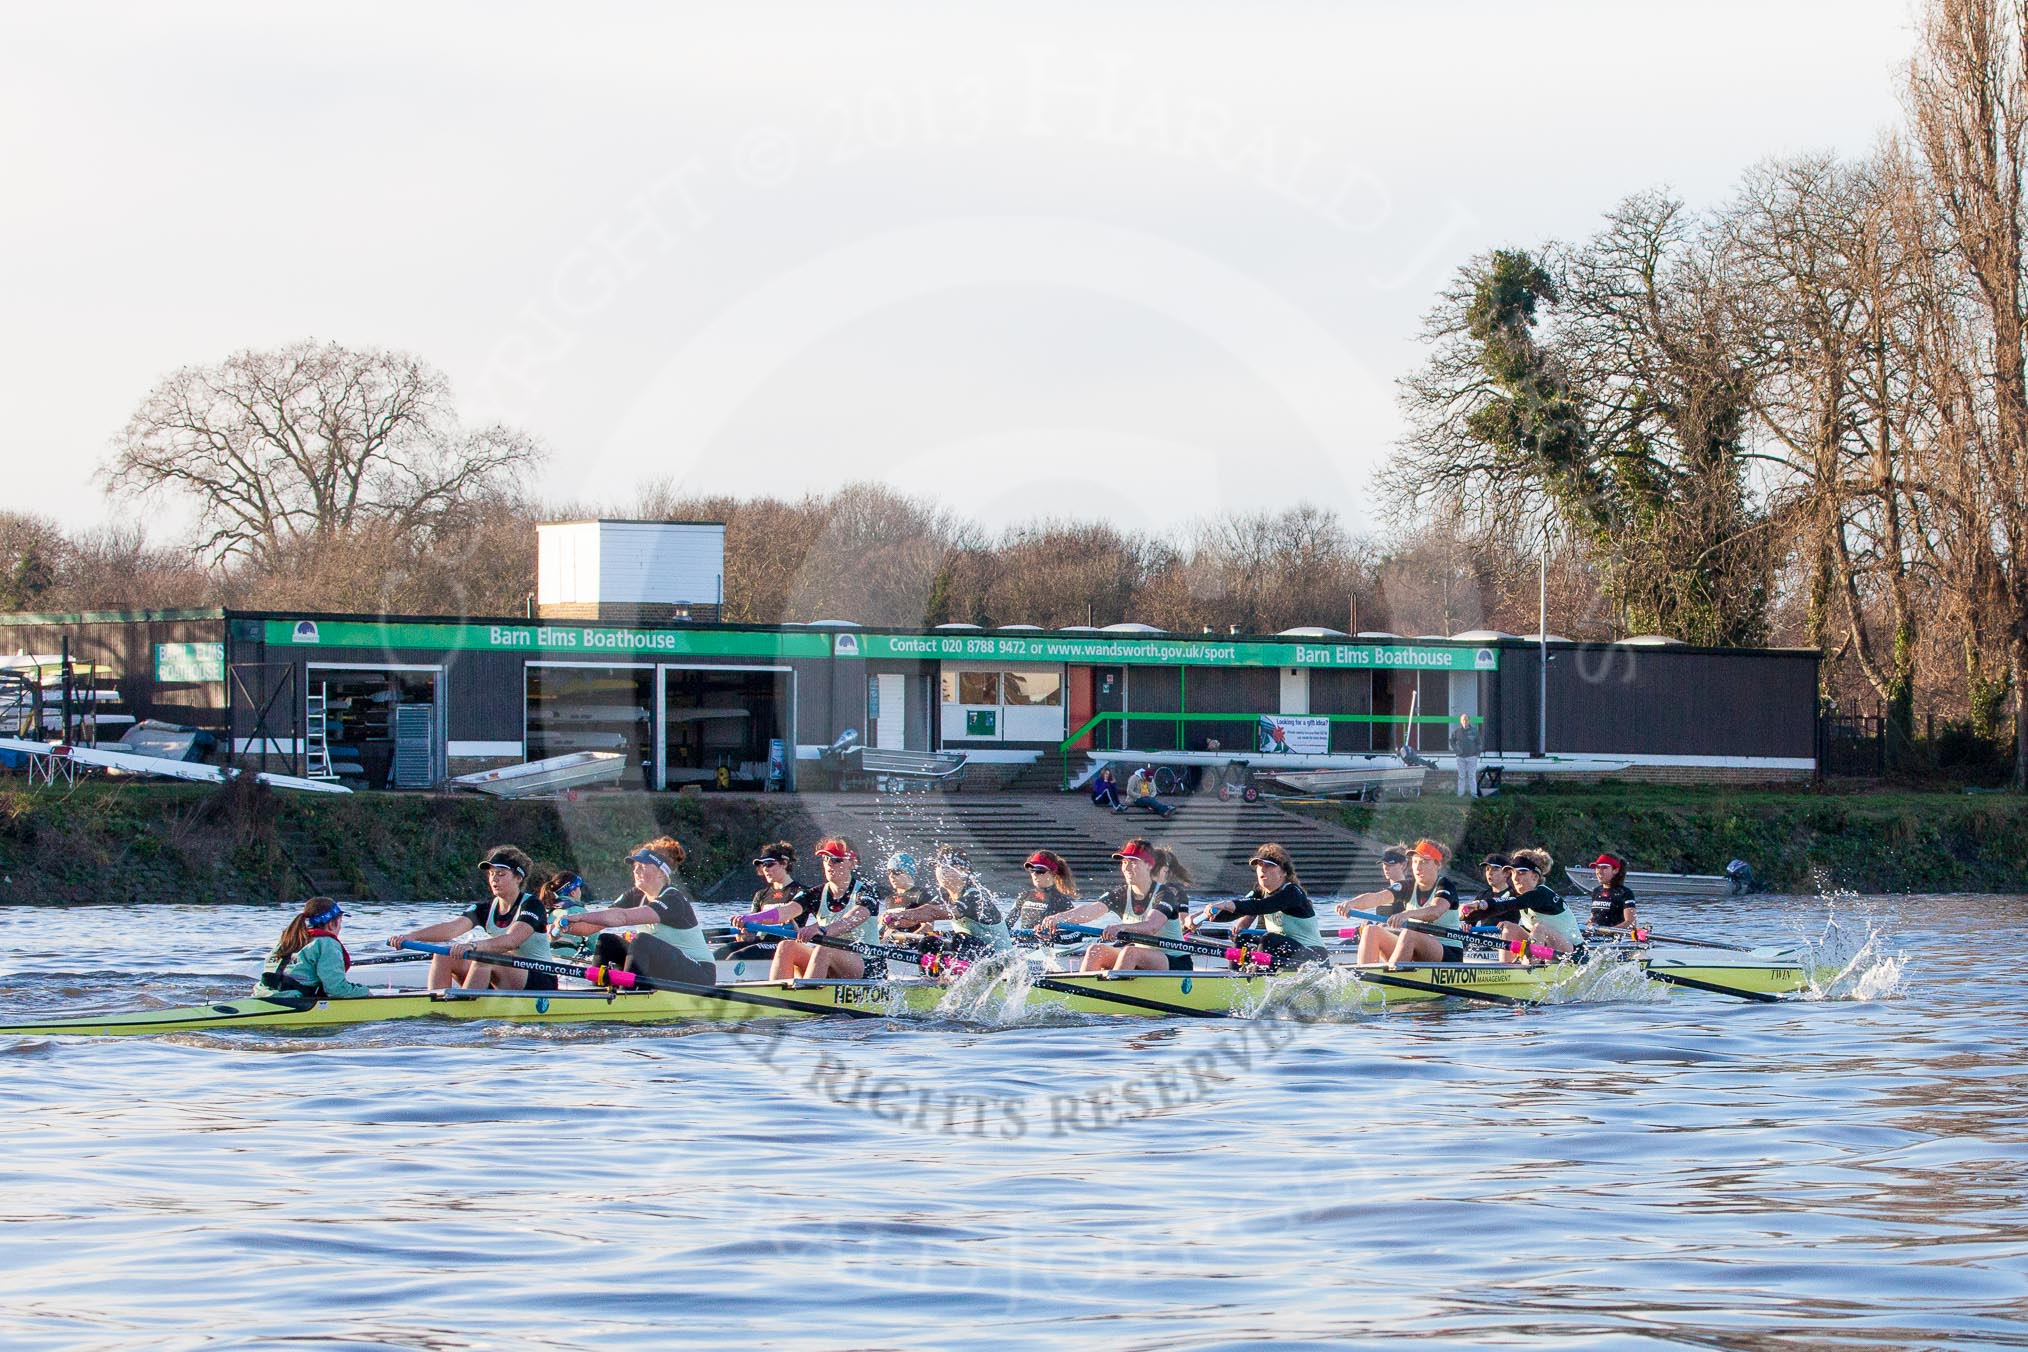 The Boat Race season 2014 - Women's Trial VIIIs(CUWBC, Cambridge): Nudge Nudge vs Wink Wink..
River Thames between Putney Bridge and Mortlake,
London SW15,

United Kingdom,
on 19 December 2013 at 14:05, image #358